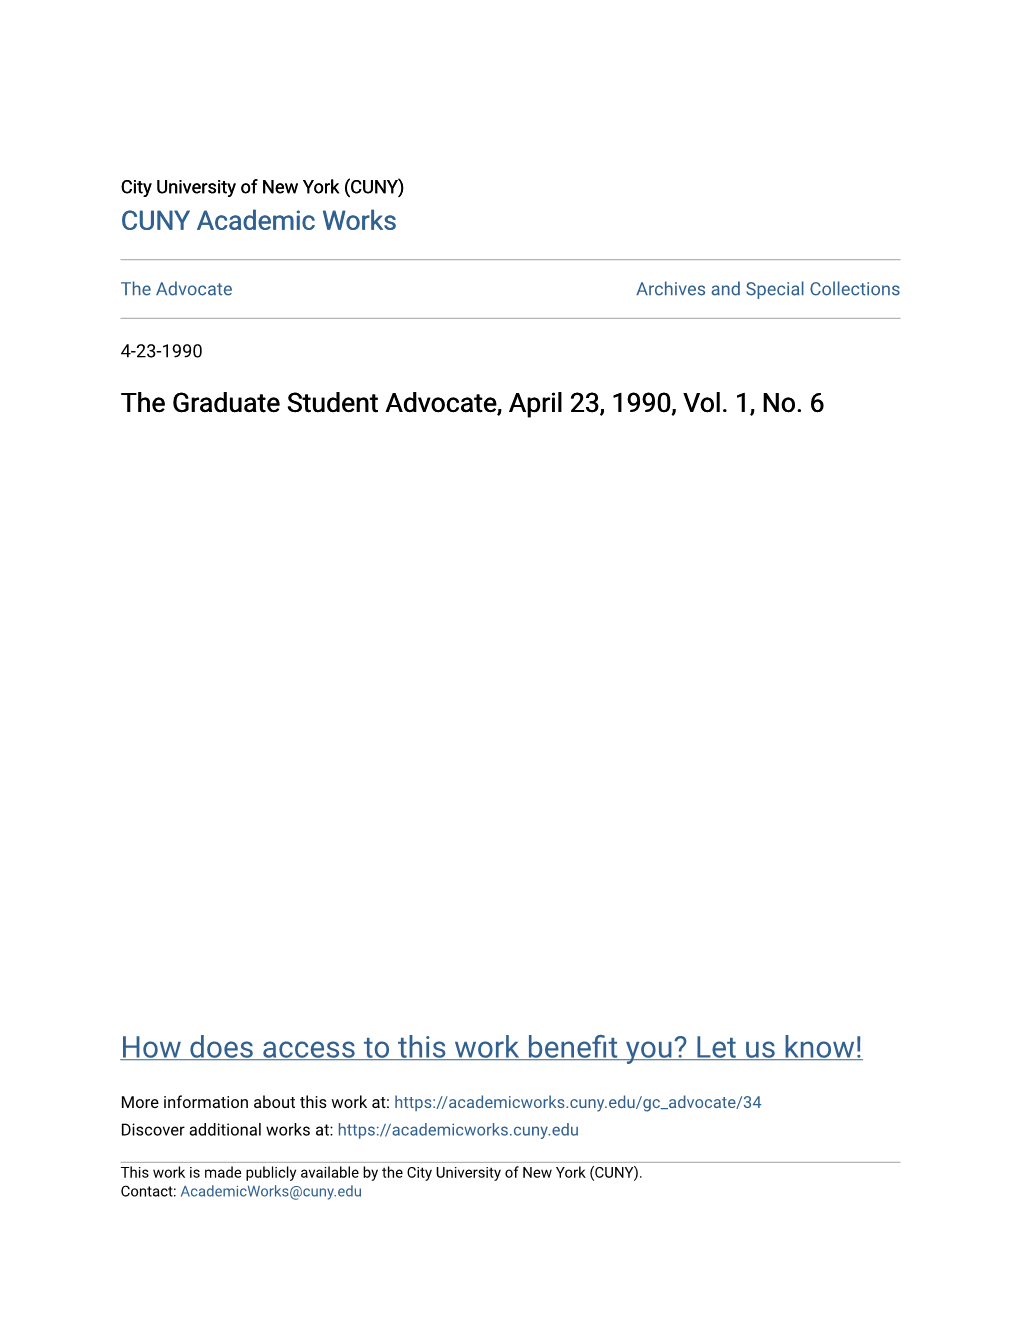 The Graduate Student Advocate, April 23, 1990, Vol